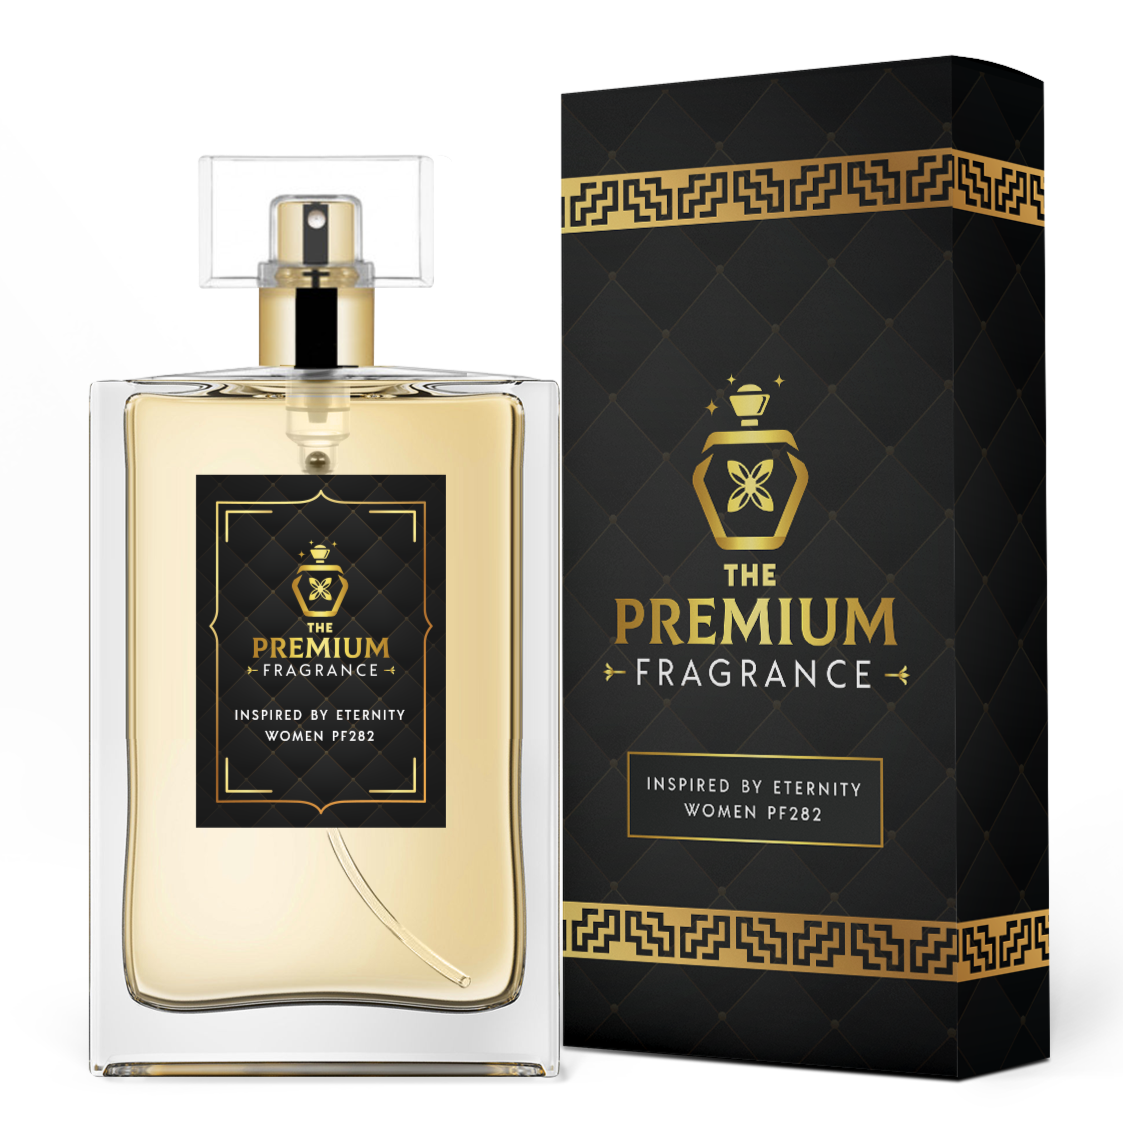 Fragrance Inspired By Eternity Women